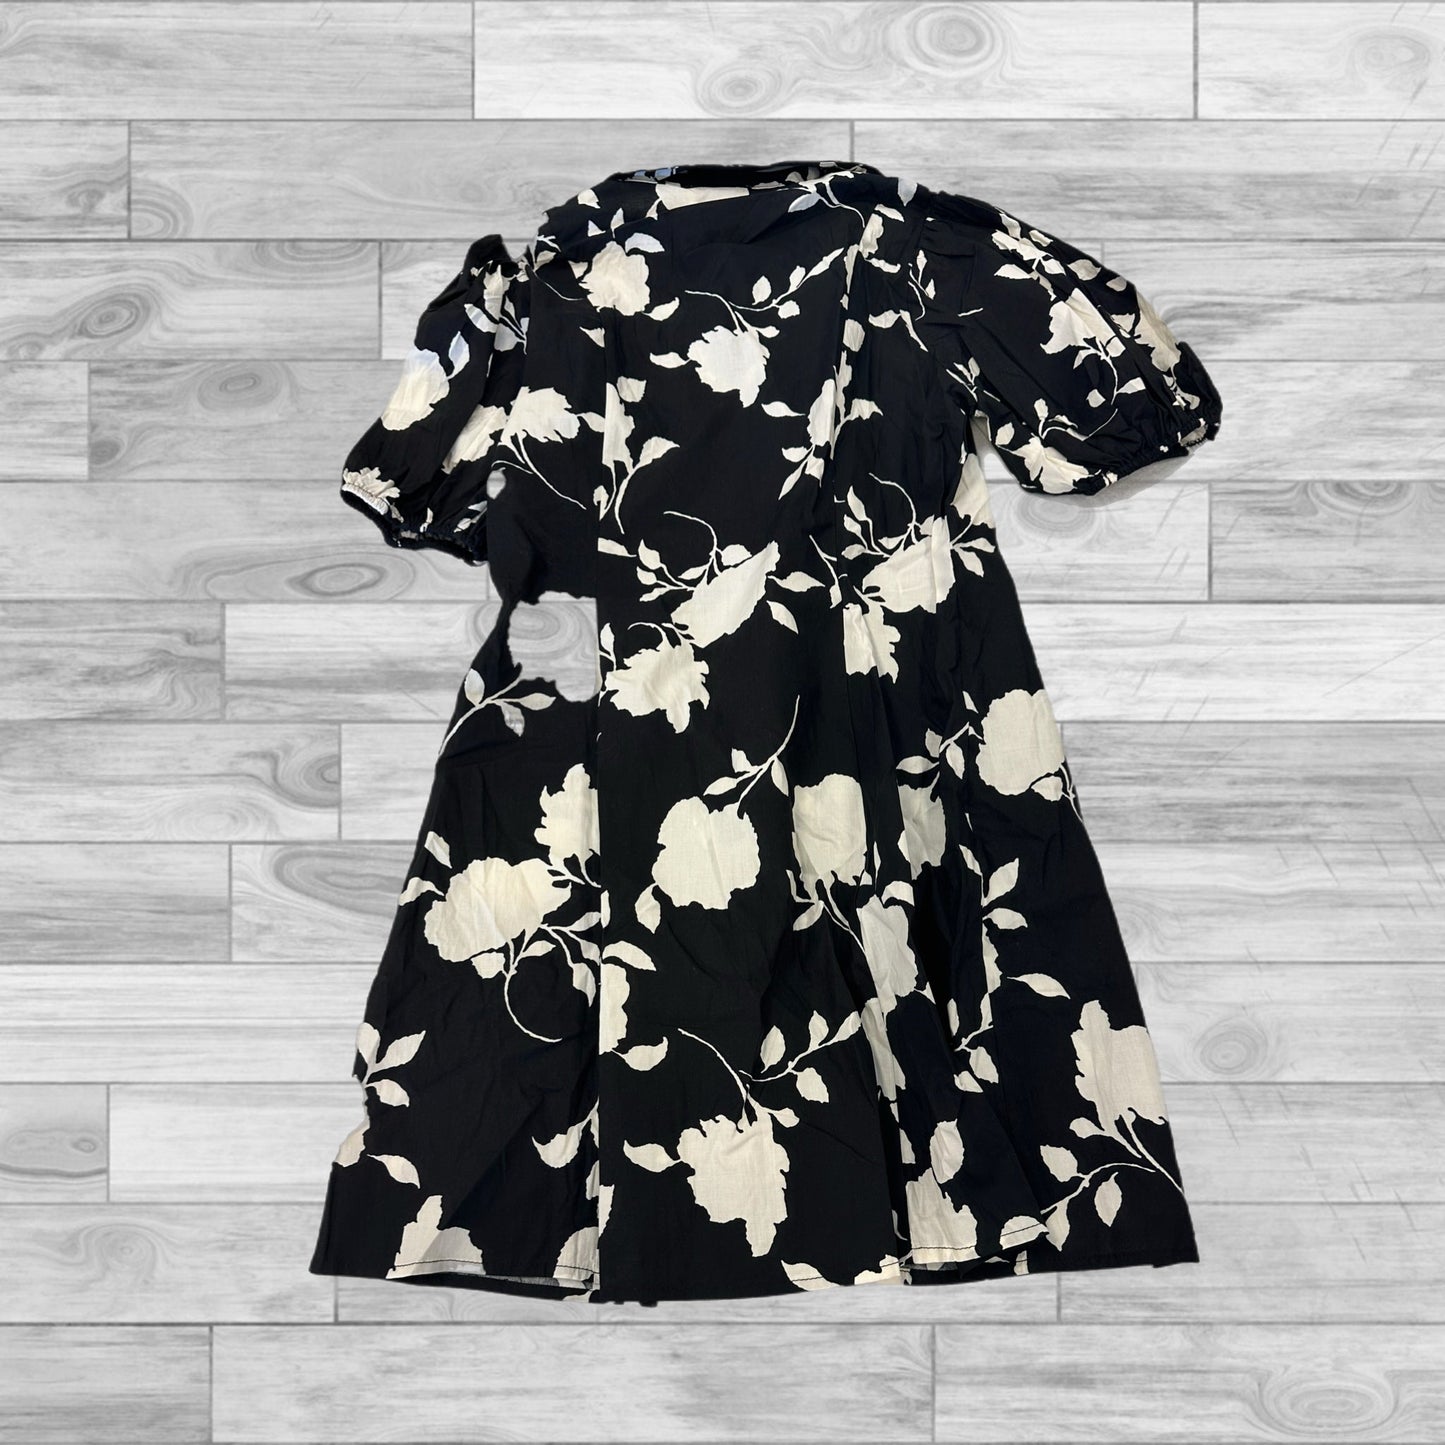 Black & White Dress Casual Short Clothes Mentor, Size L